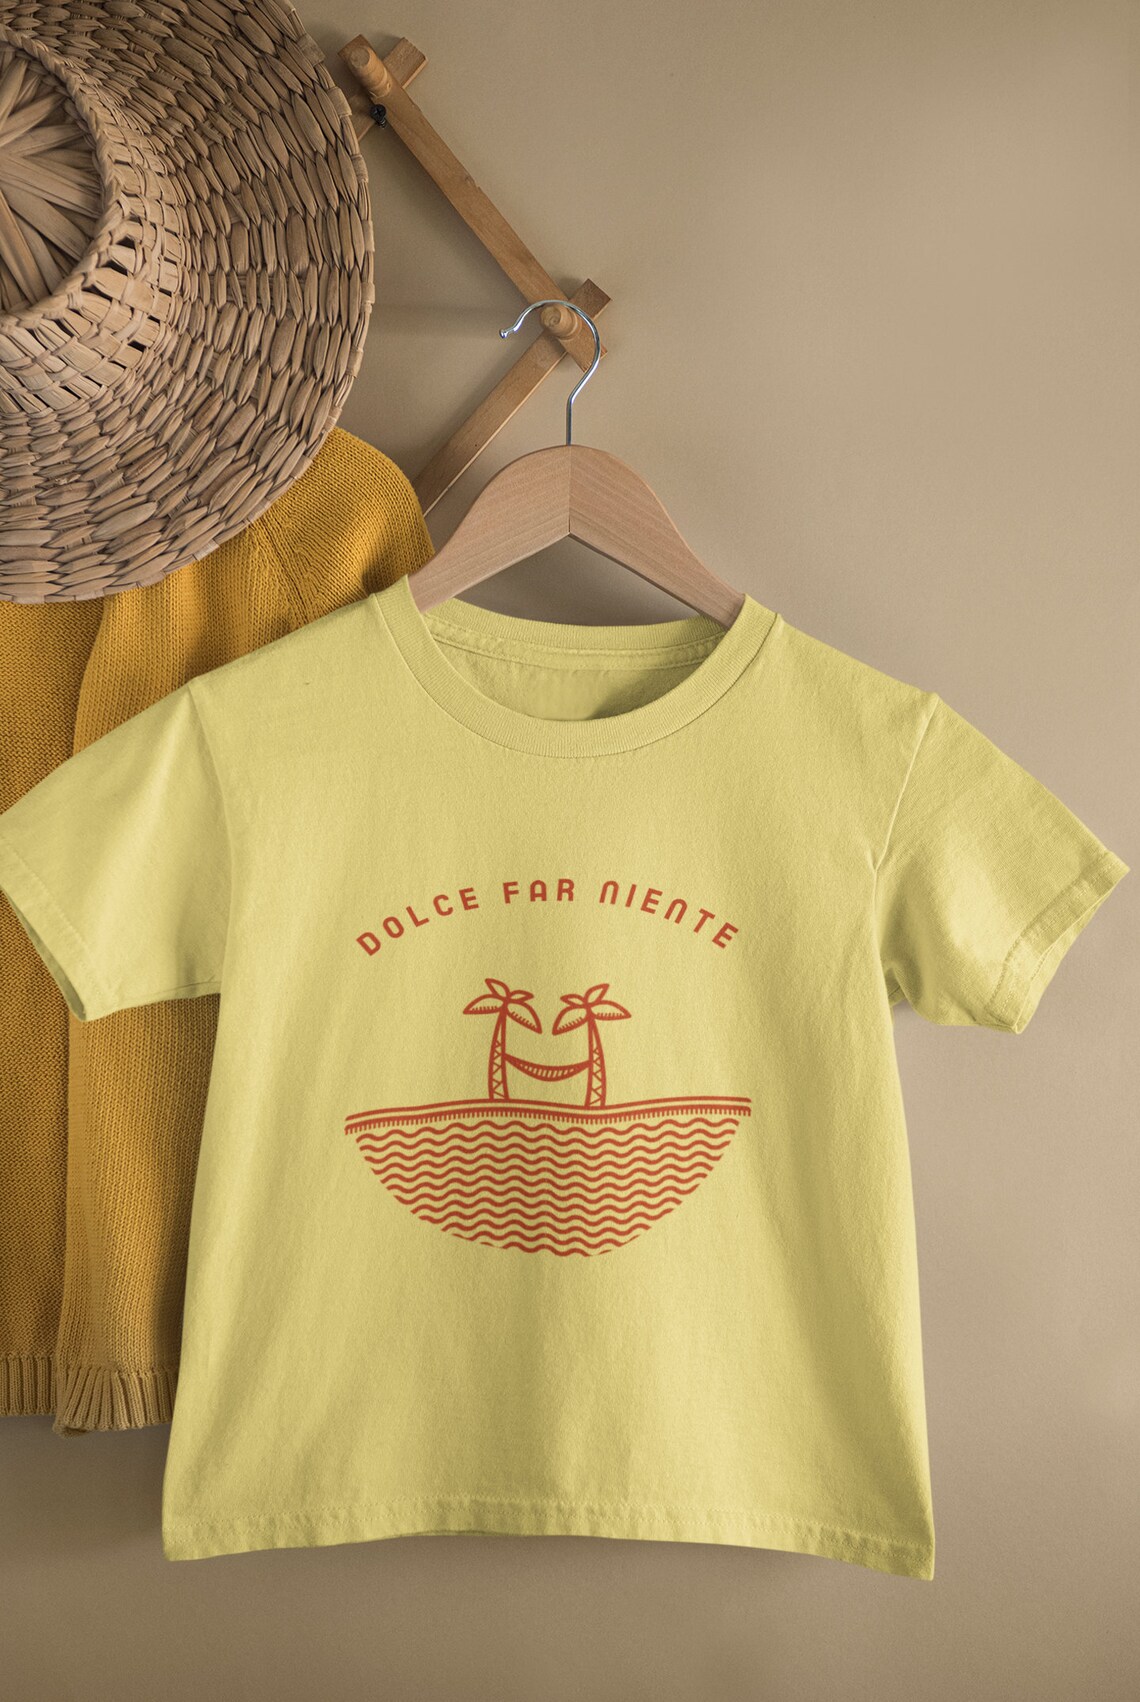 Kids Cool T-shirt, Dolce Far Niente, Palm Tree Graphic T-shirt, Kids ...